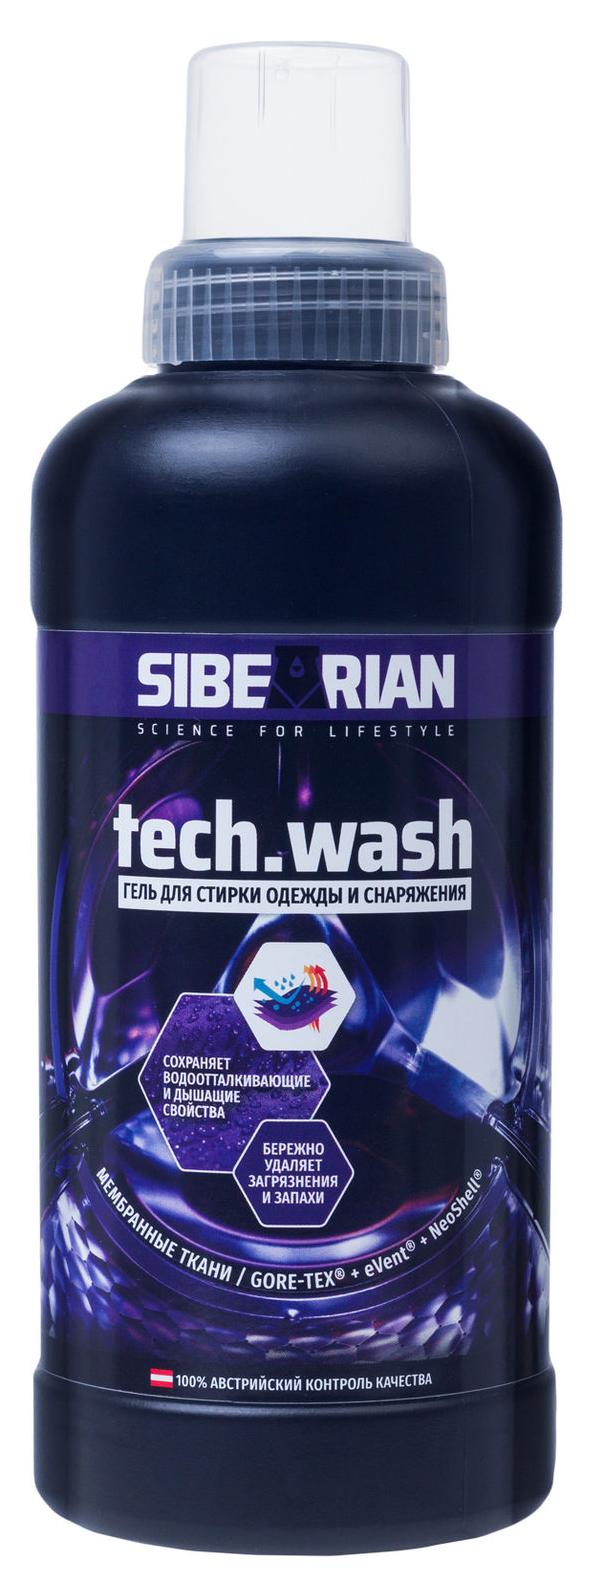 Средство для стирки одежды Sibearian Tech Wash 500 мл